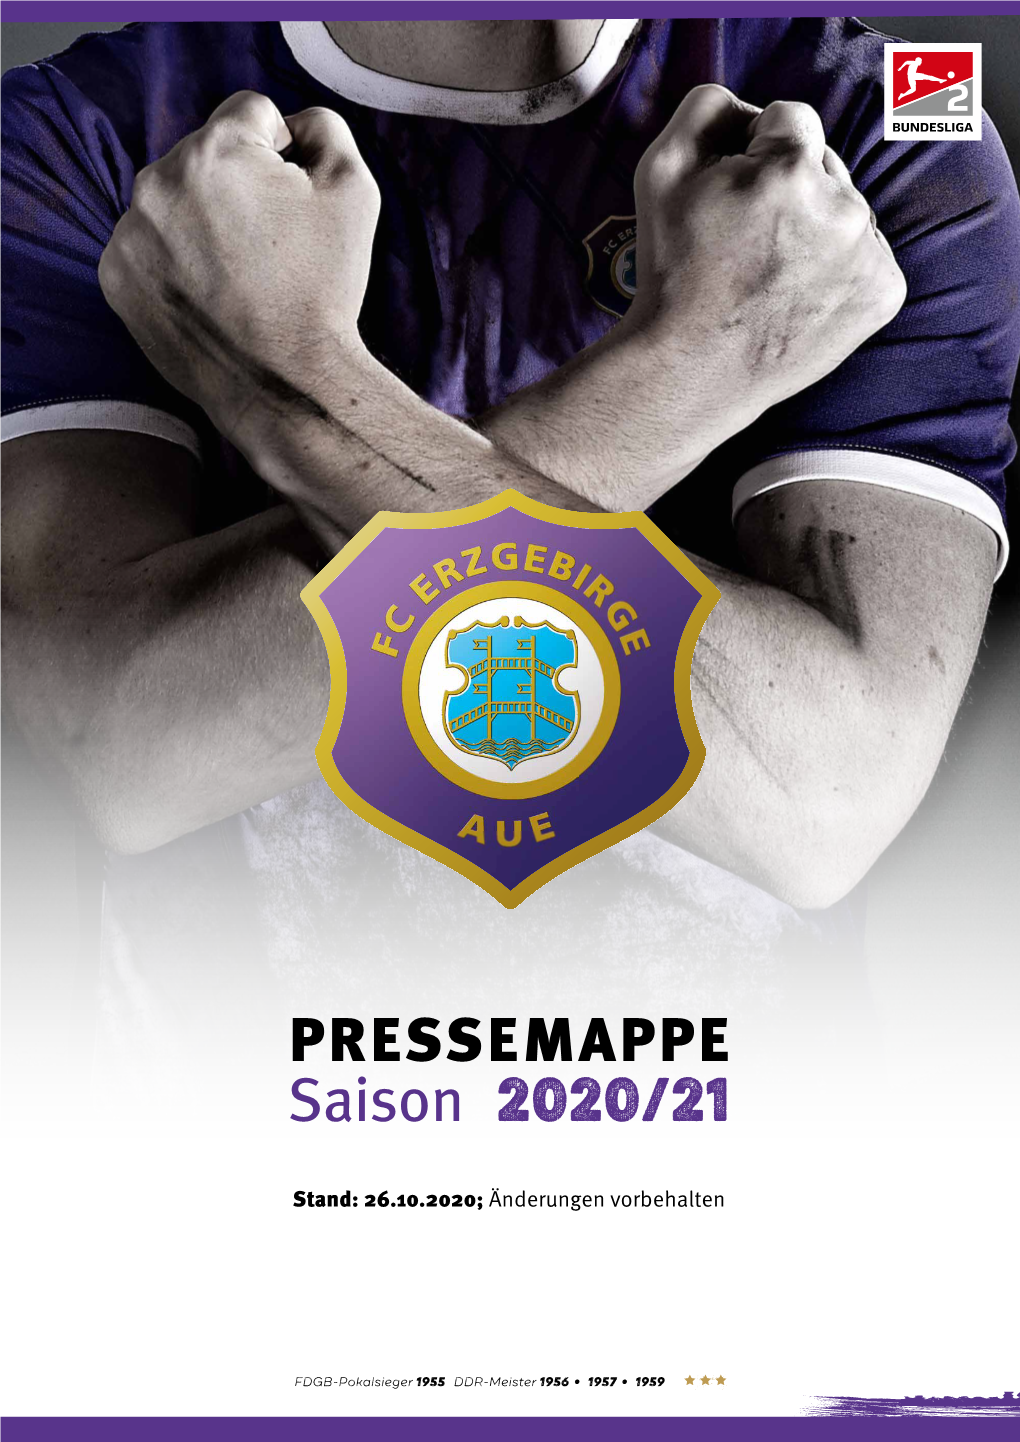 PRESSEMAPPE Saison 2020/21